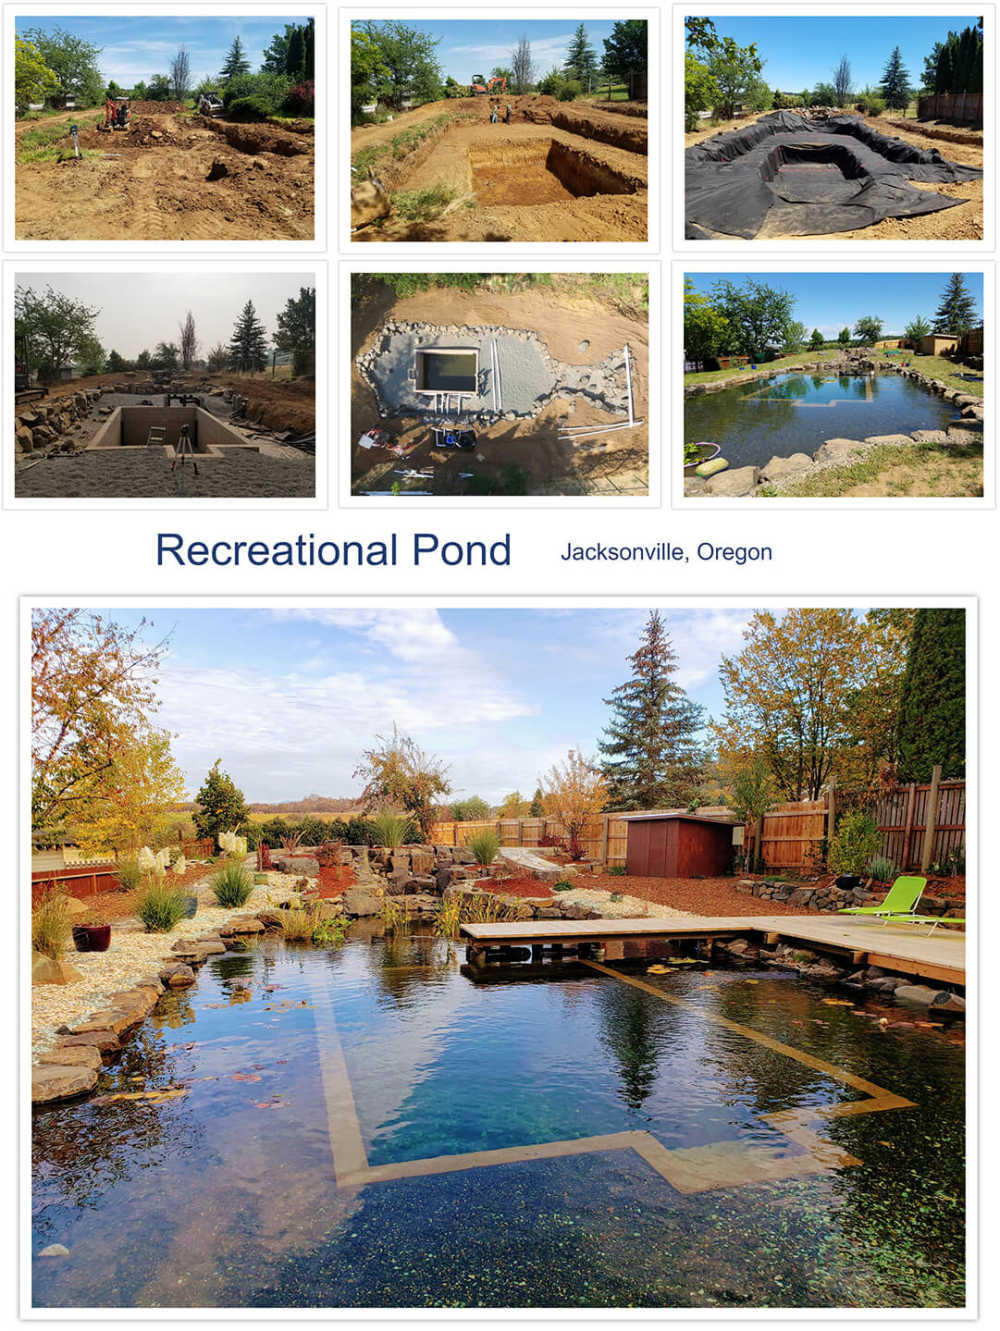 Recreational Pond - Jacksonville, Oregon